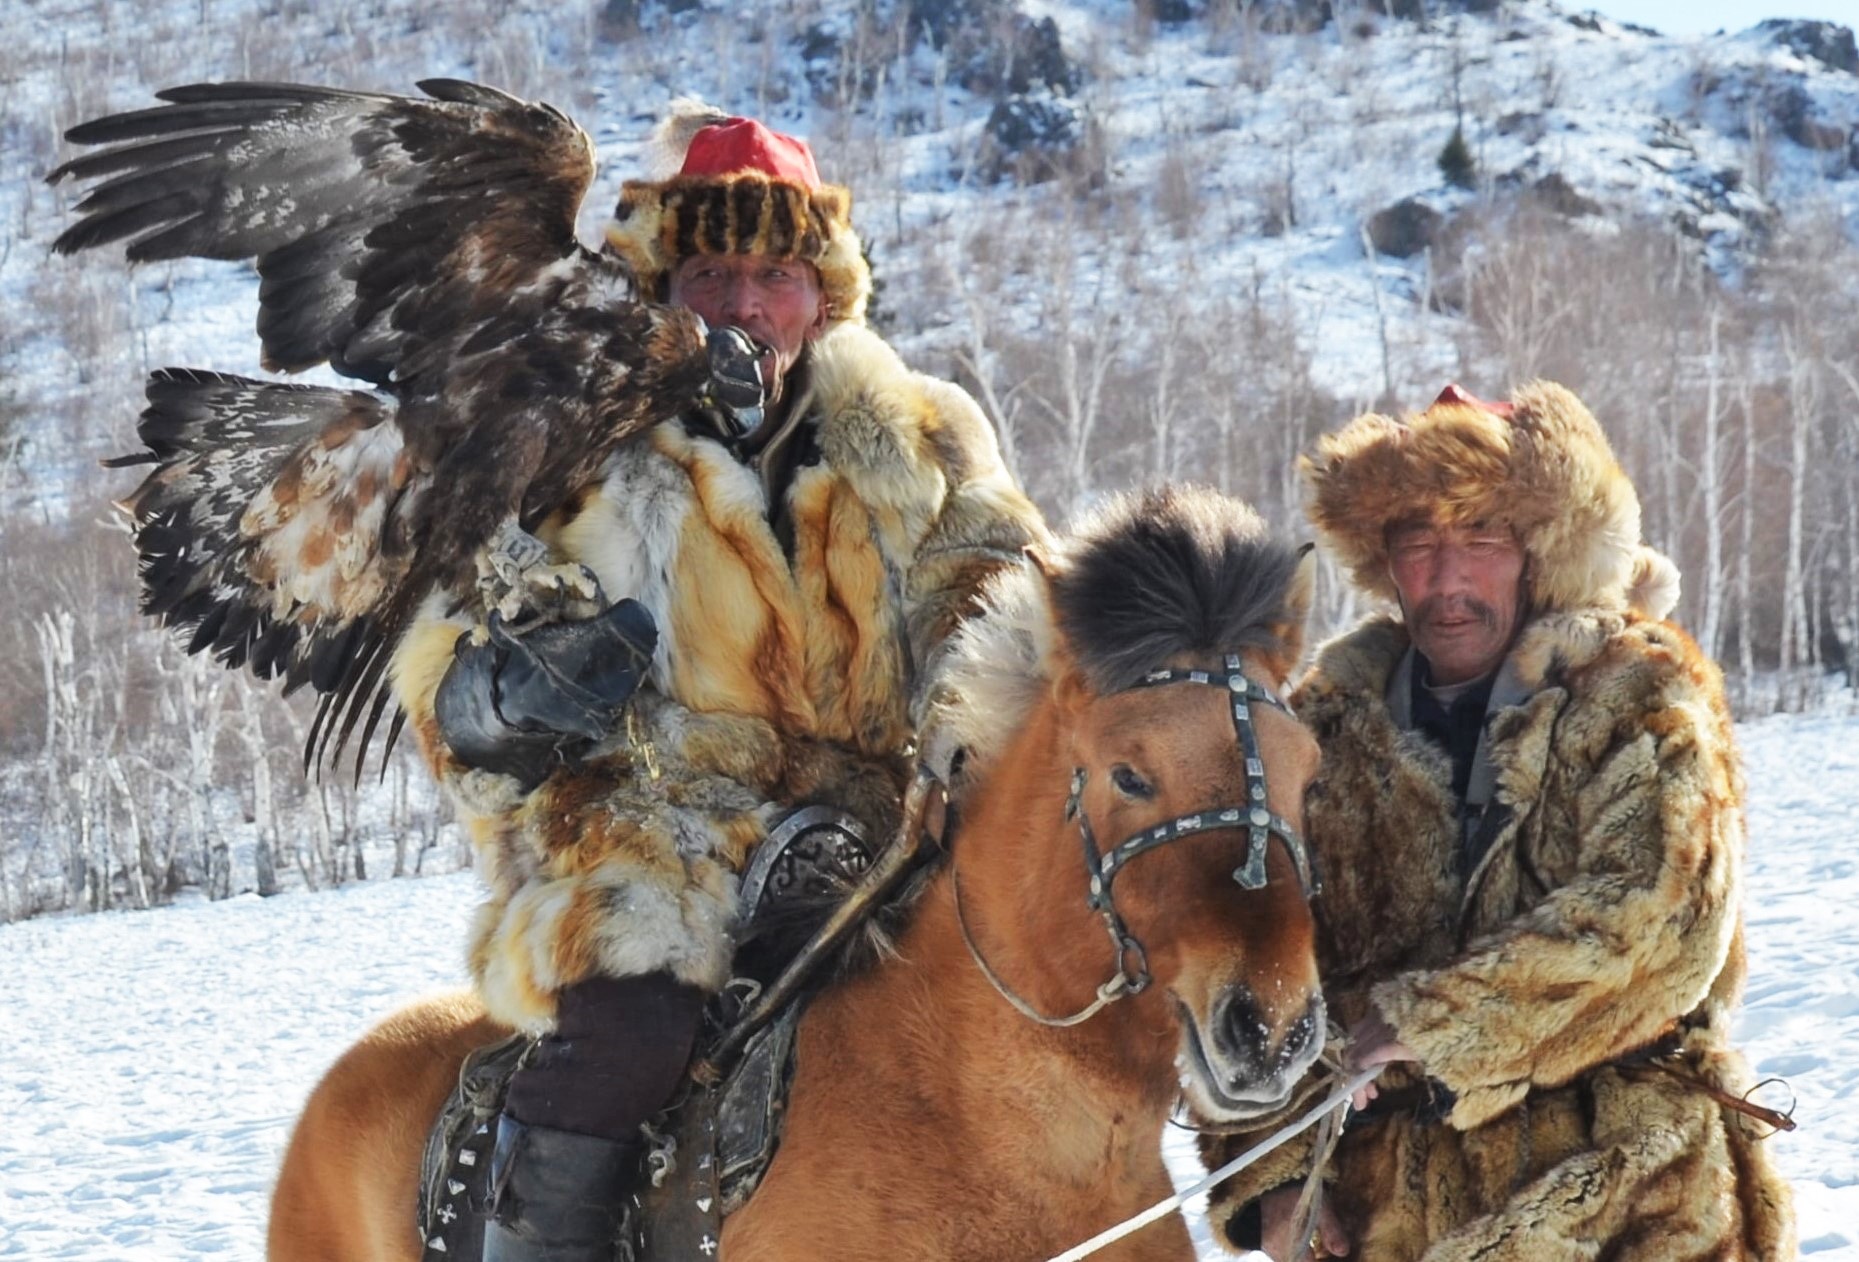 Festivals in Mongolia - Celebrations of Nomadic Traditions, Golden Eagle Winter Festival, Ulaanbaatar